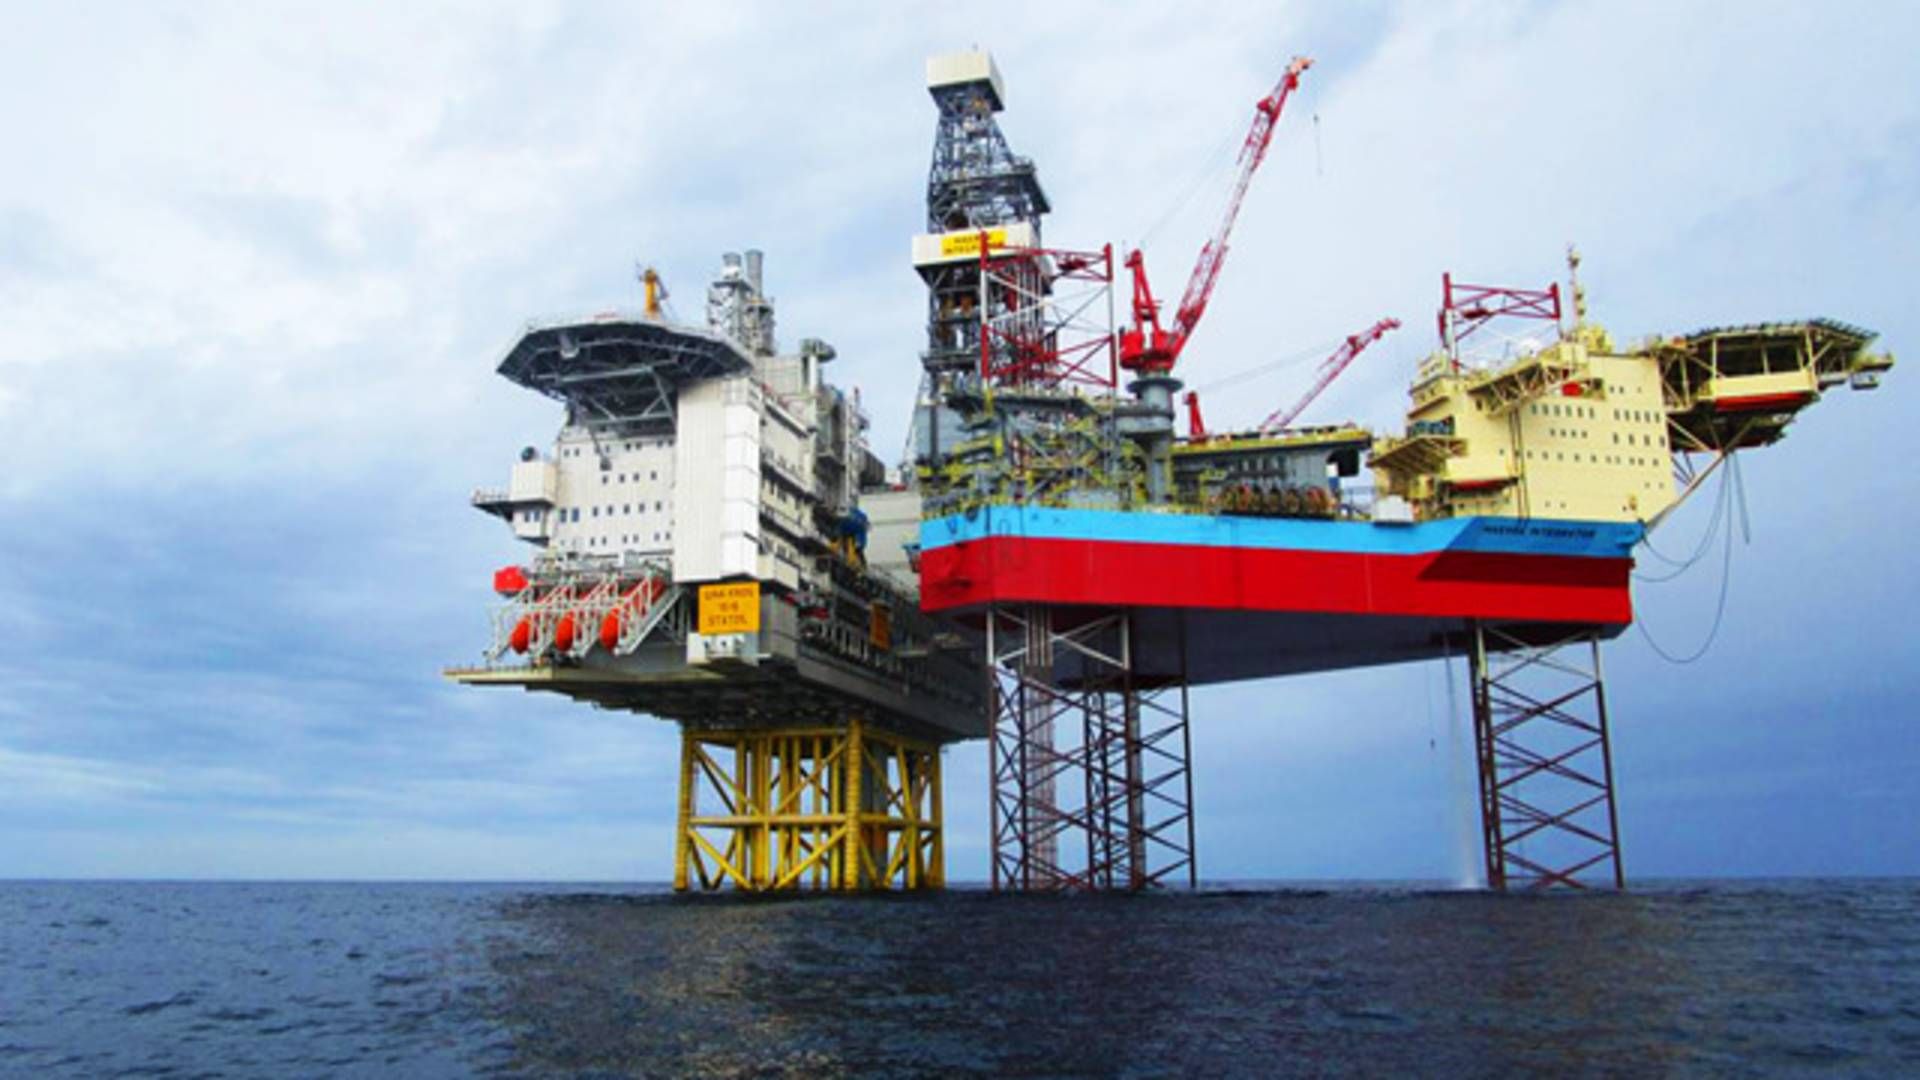 Foto: PR / Maersk Drilling